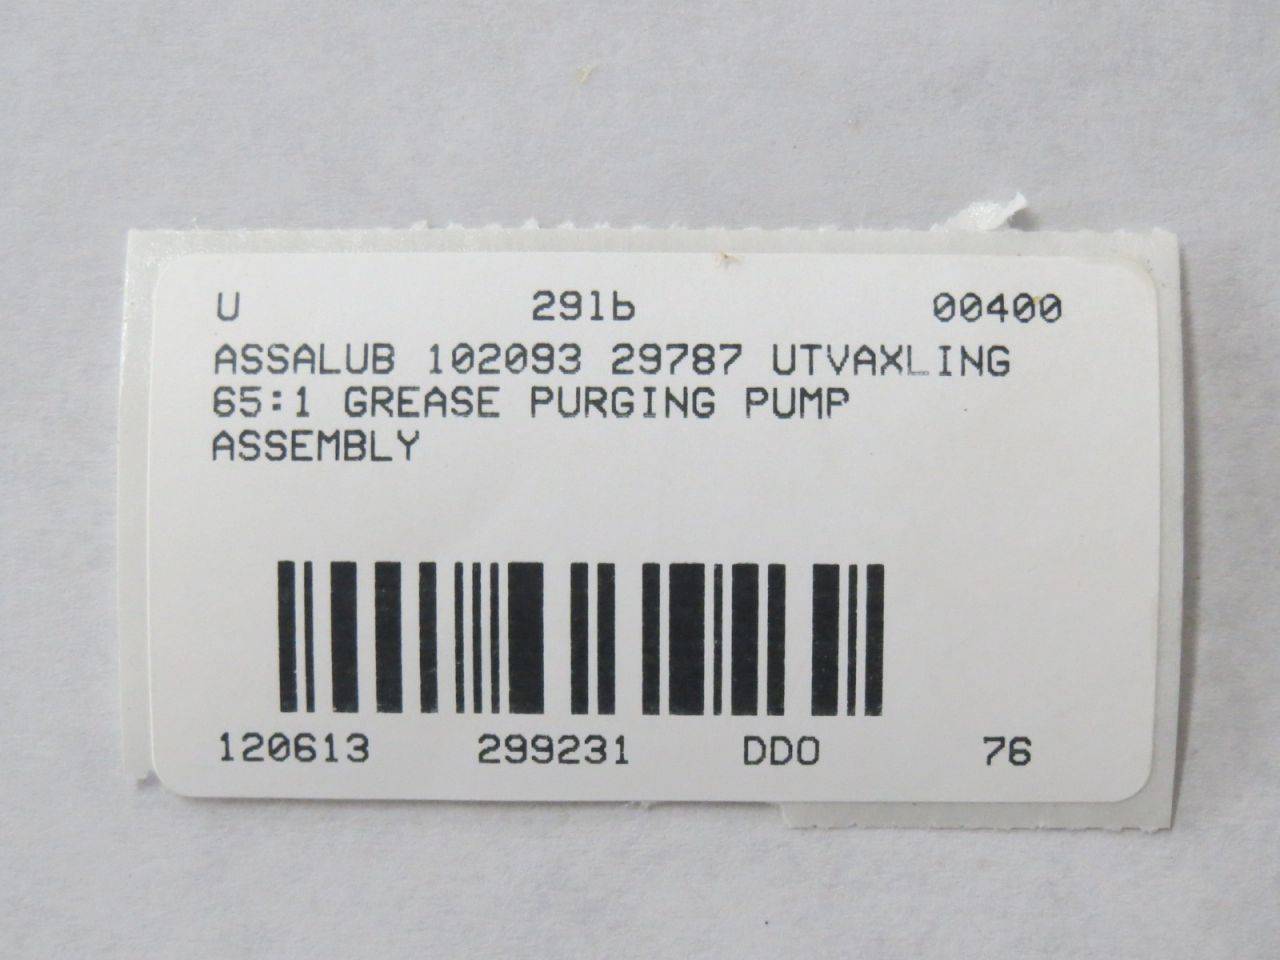 Assalub 102093 Utvaxling 65:1 Purging Pump Assembly B299231